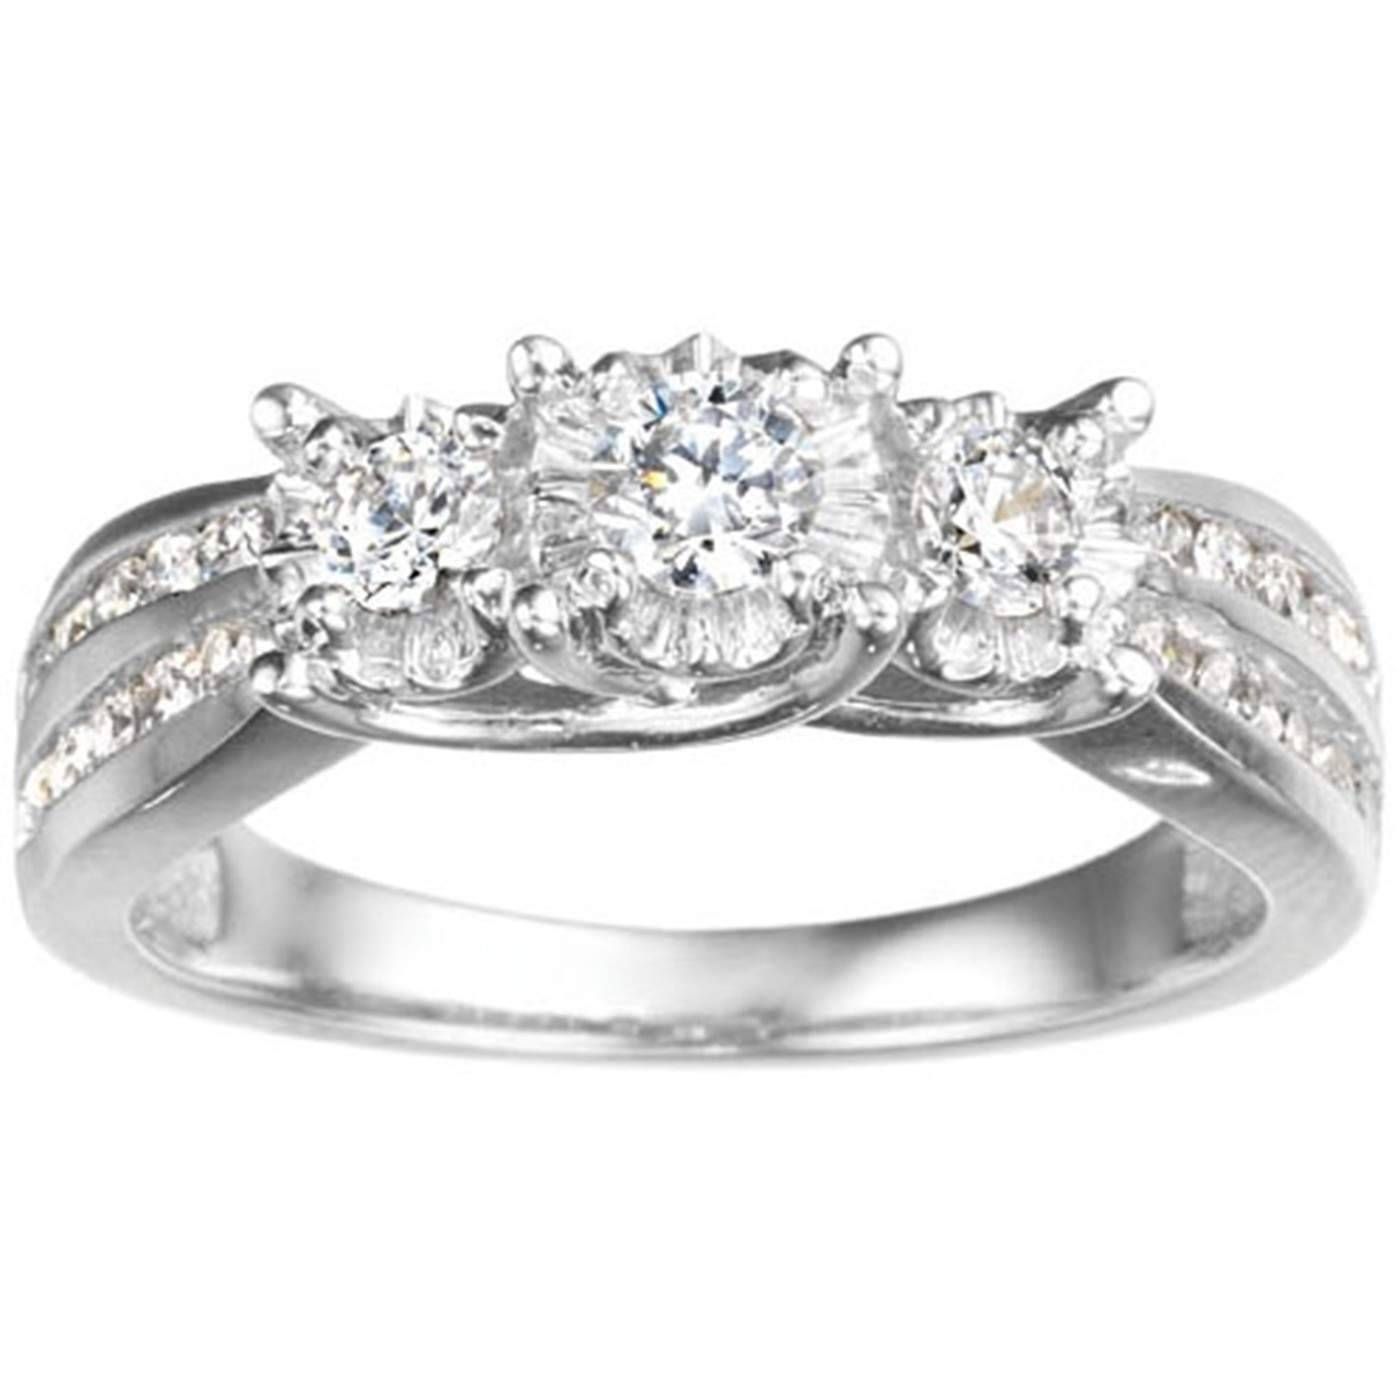 Elegant Diamond Wedding Bands For Women | Wedding Ideas For Cheap Wedding Bands For Her (View 3 of 15)